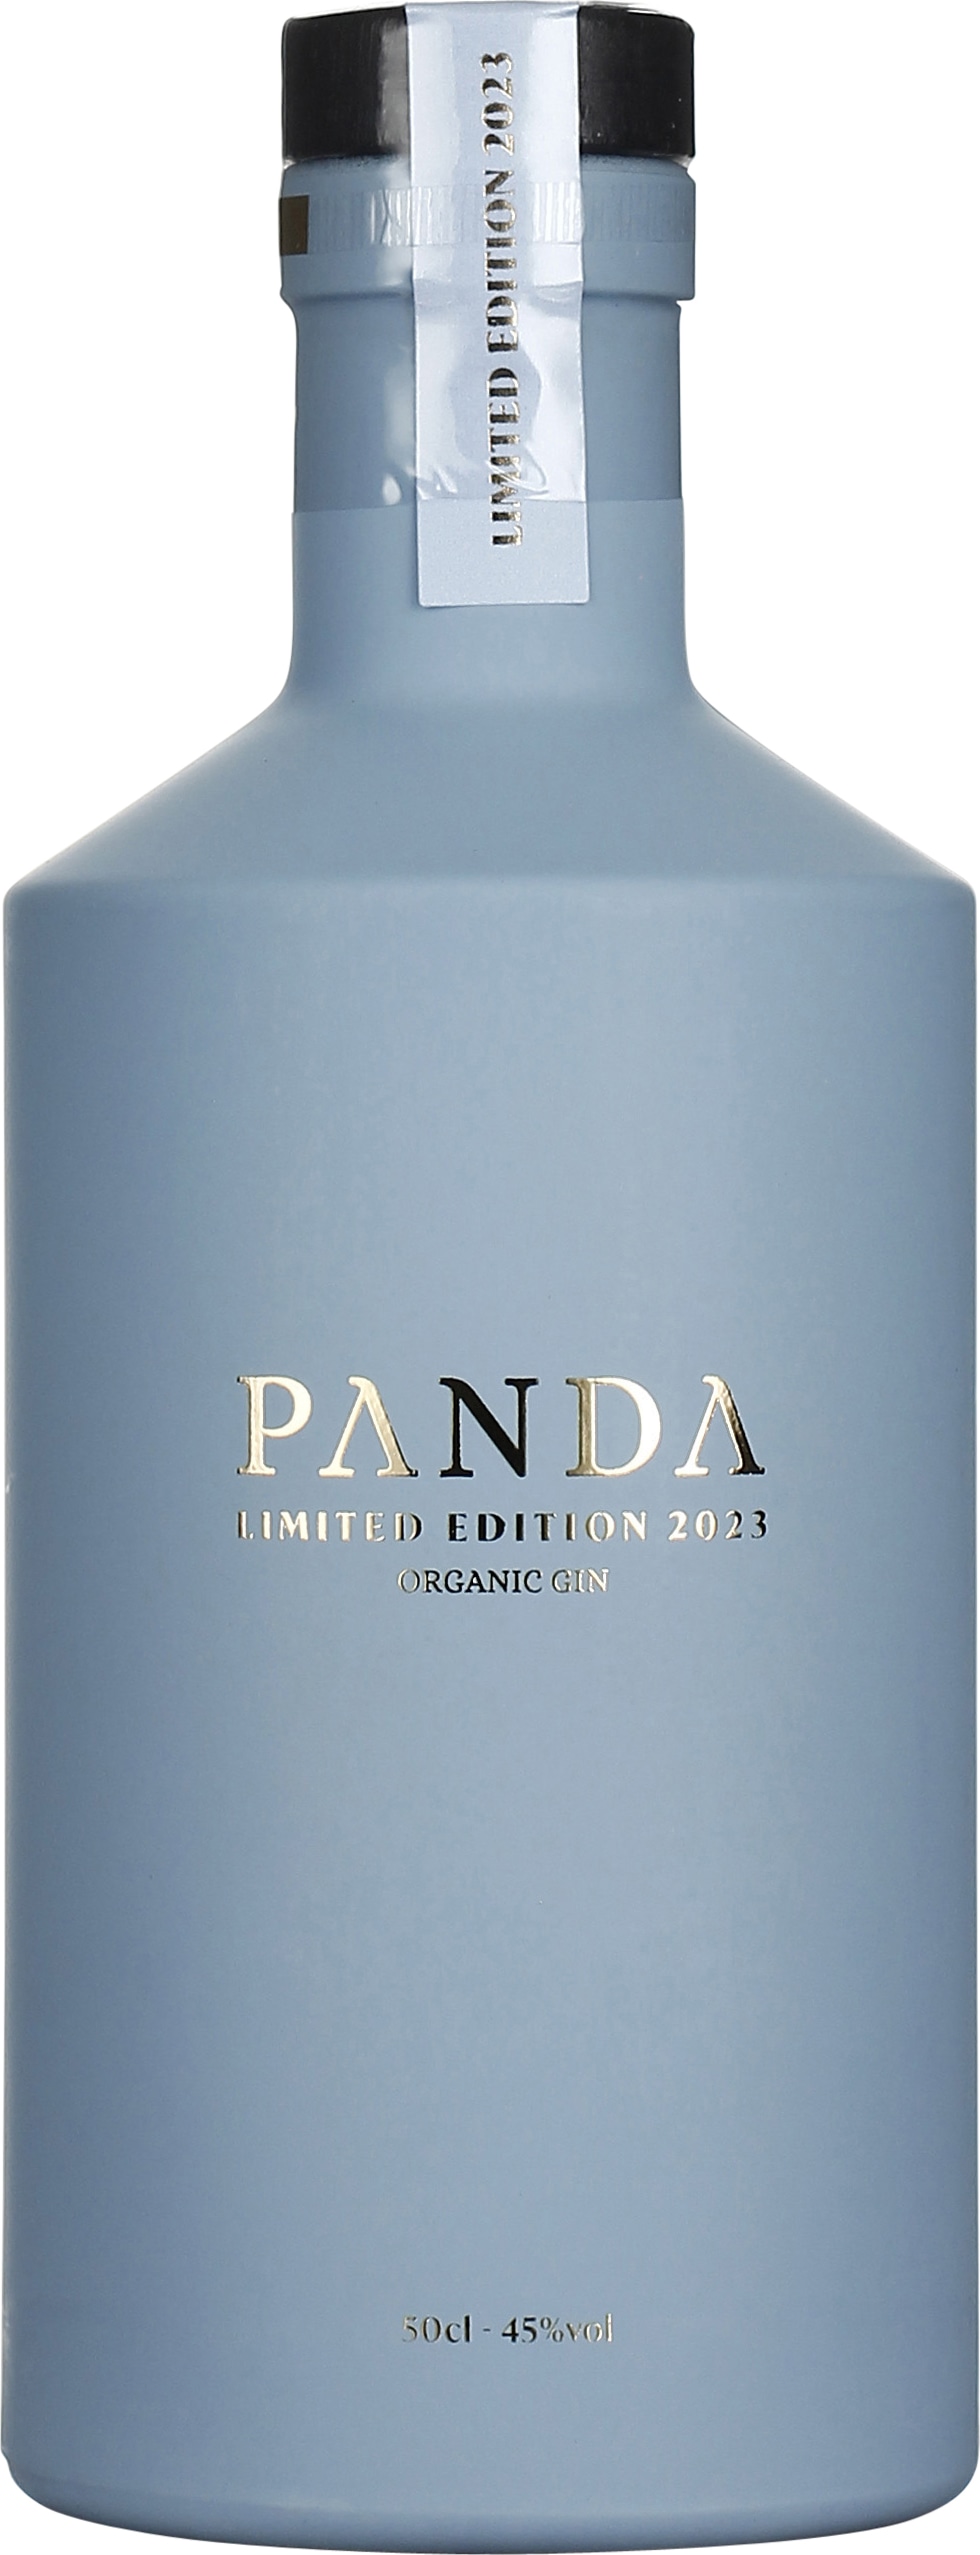 Drankdozijn Panda Gin Limited Edition 2023 50CL aanbieding